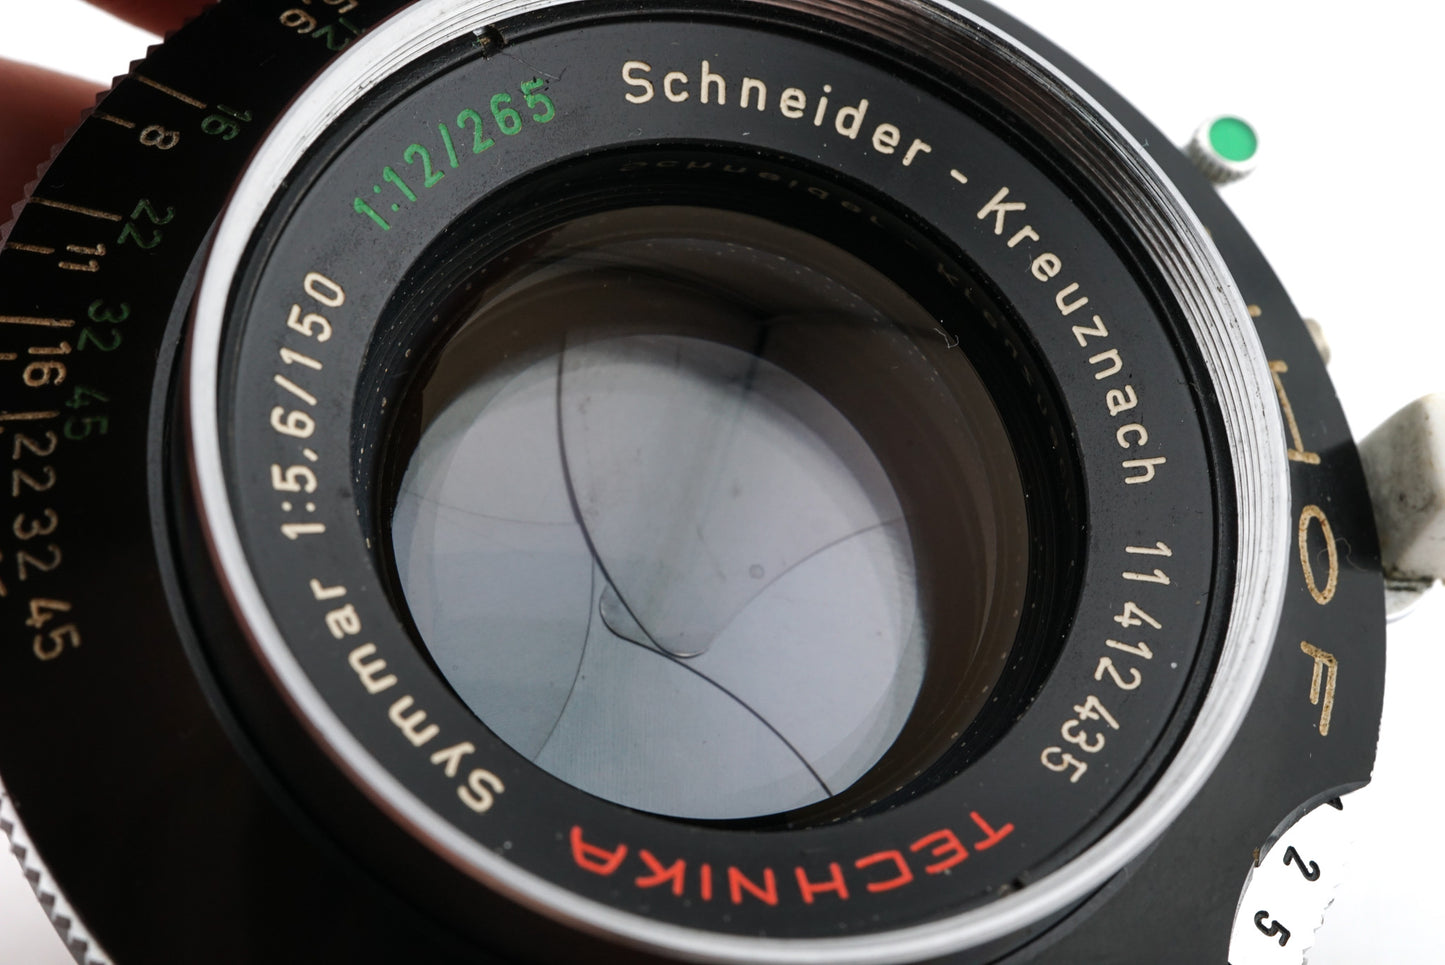 Schneider-Kreuznach 150mm f5.6 / 265mm f12 Symmar Technika (Shutter)